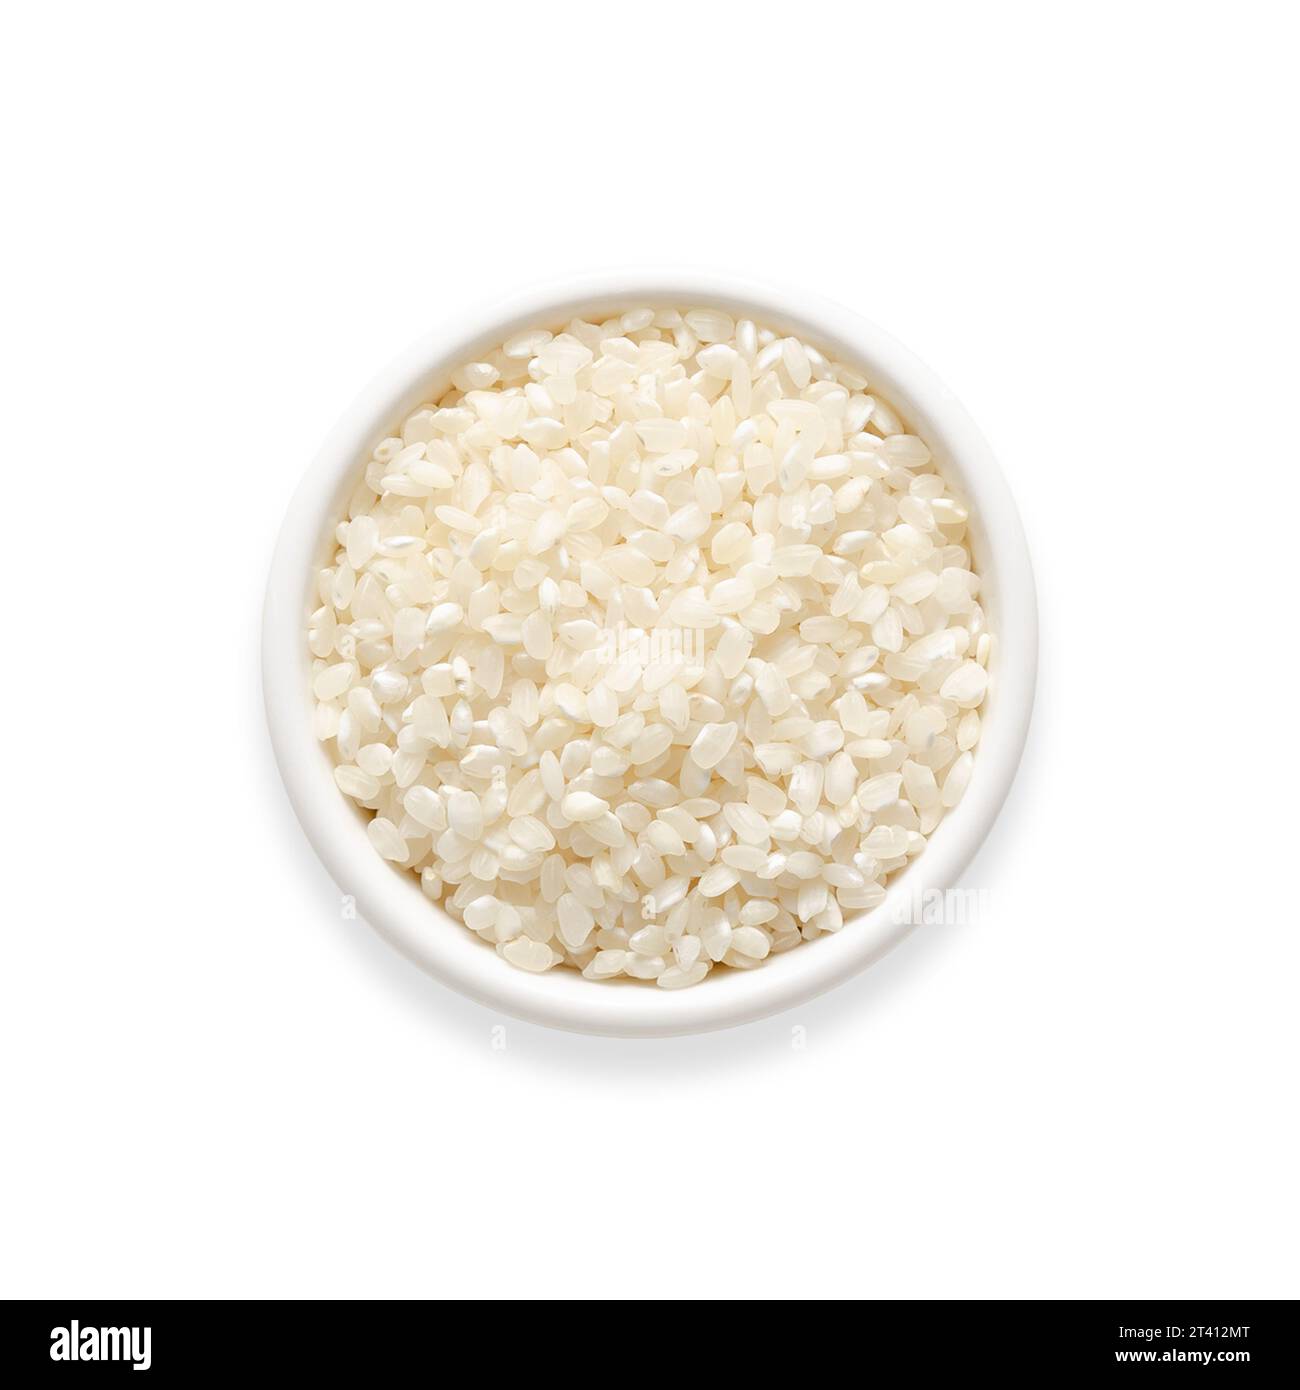 Koshihikari rice in a white bowl on white background. Square format. Top view. Stock Photo